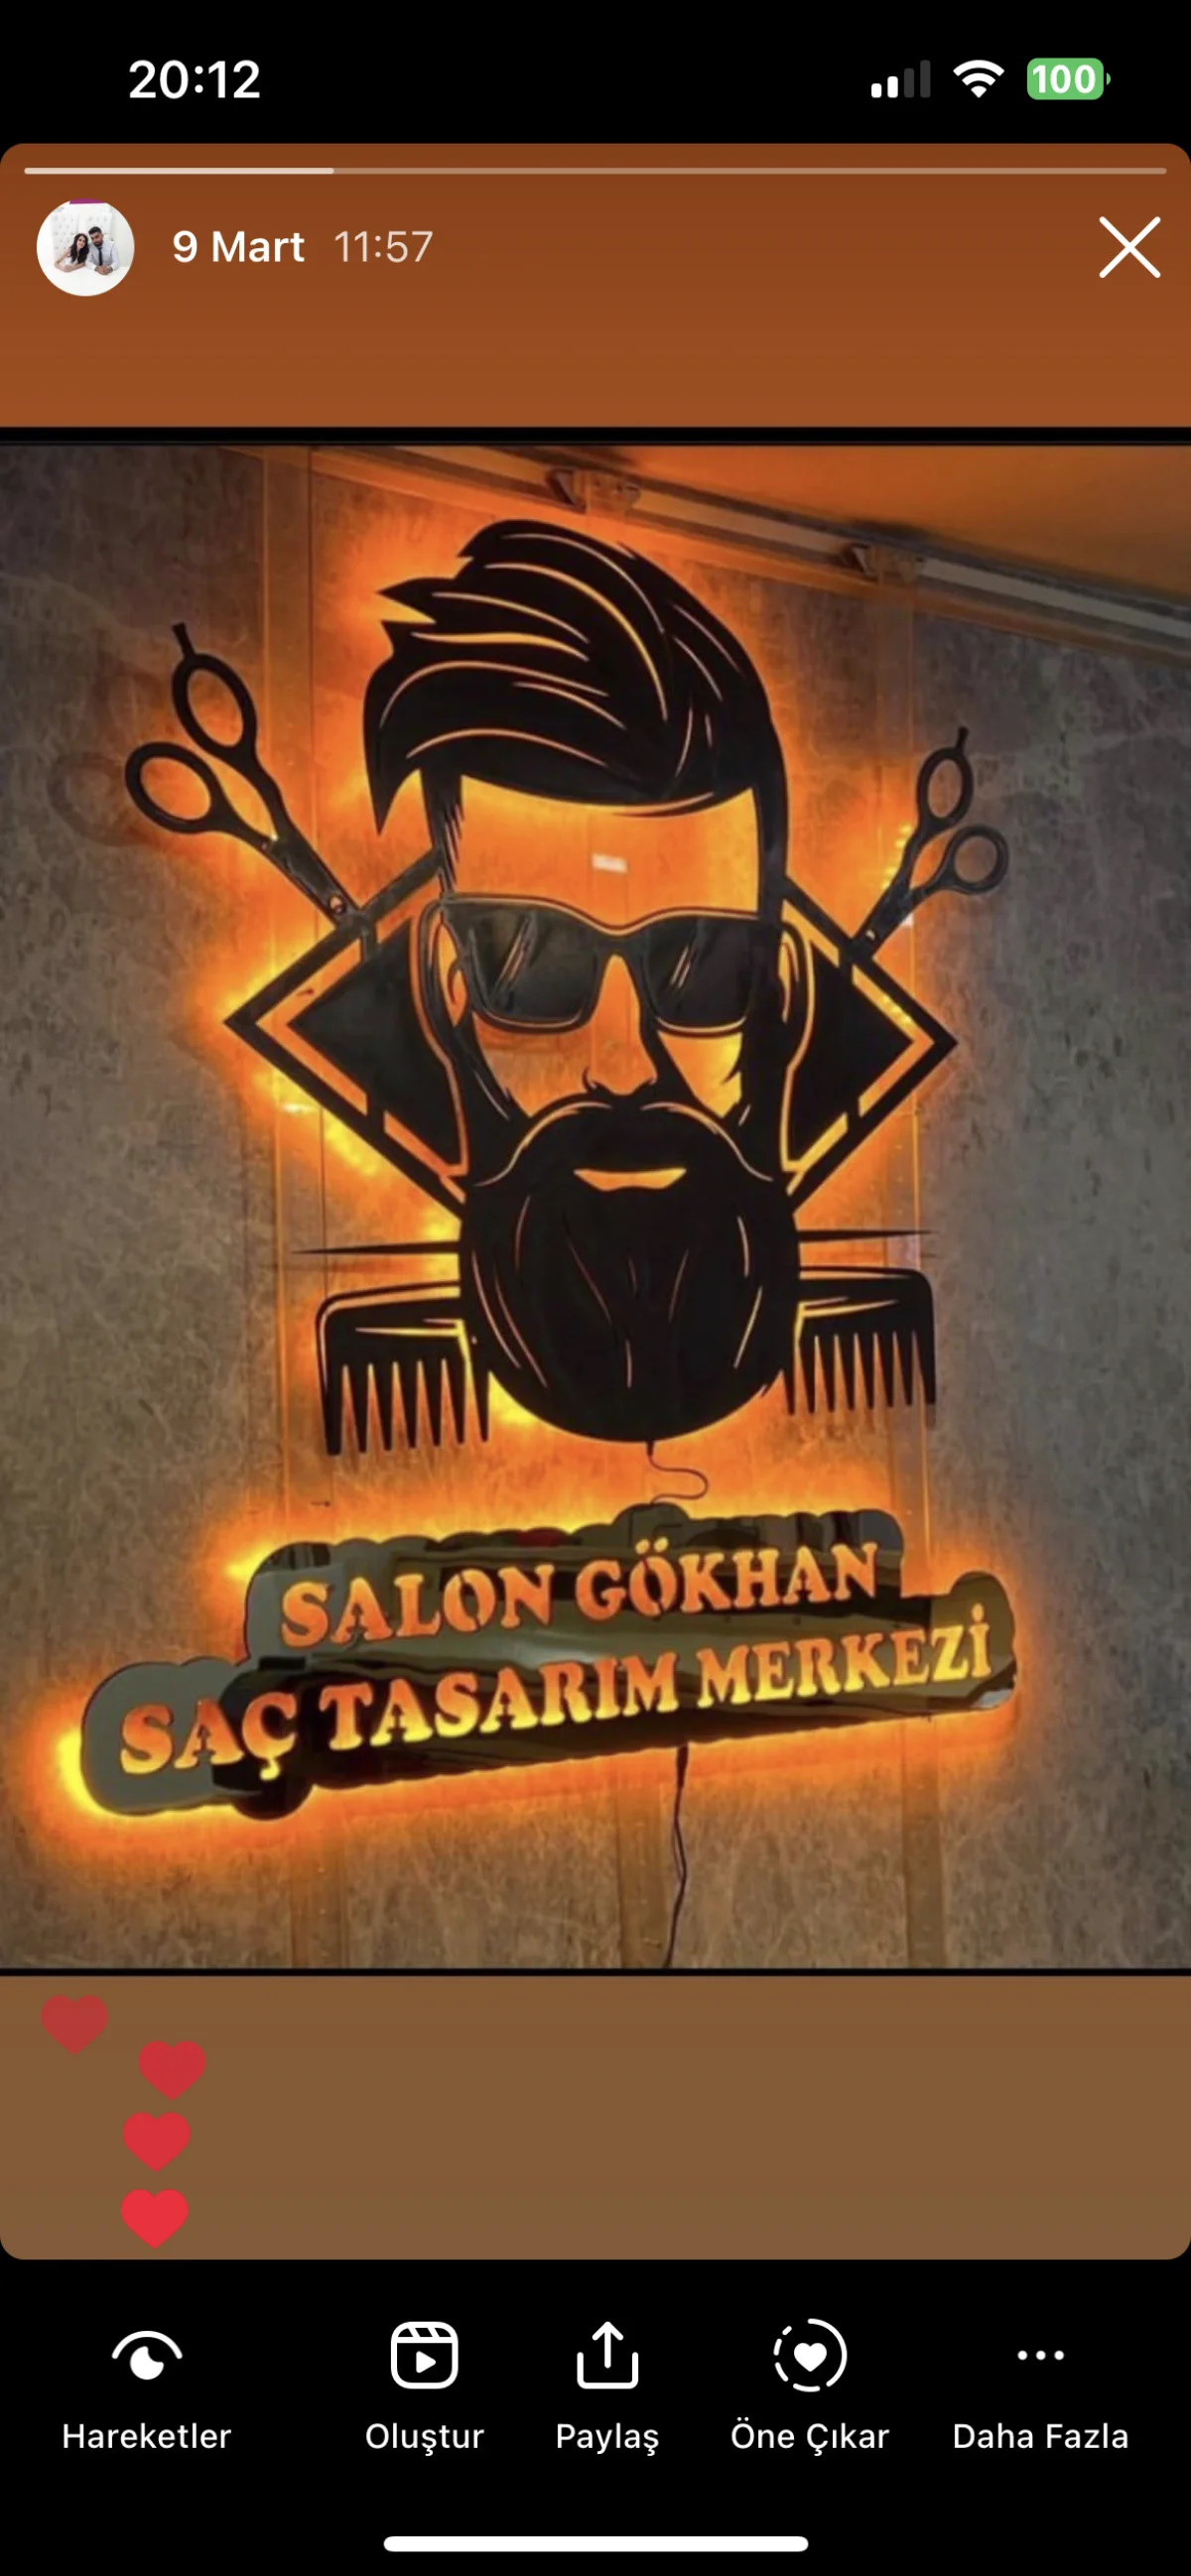 Salon Gökhan